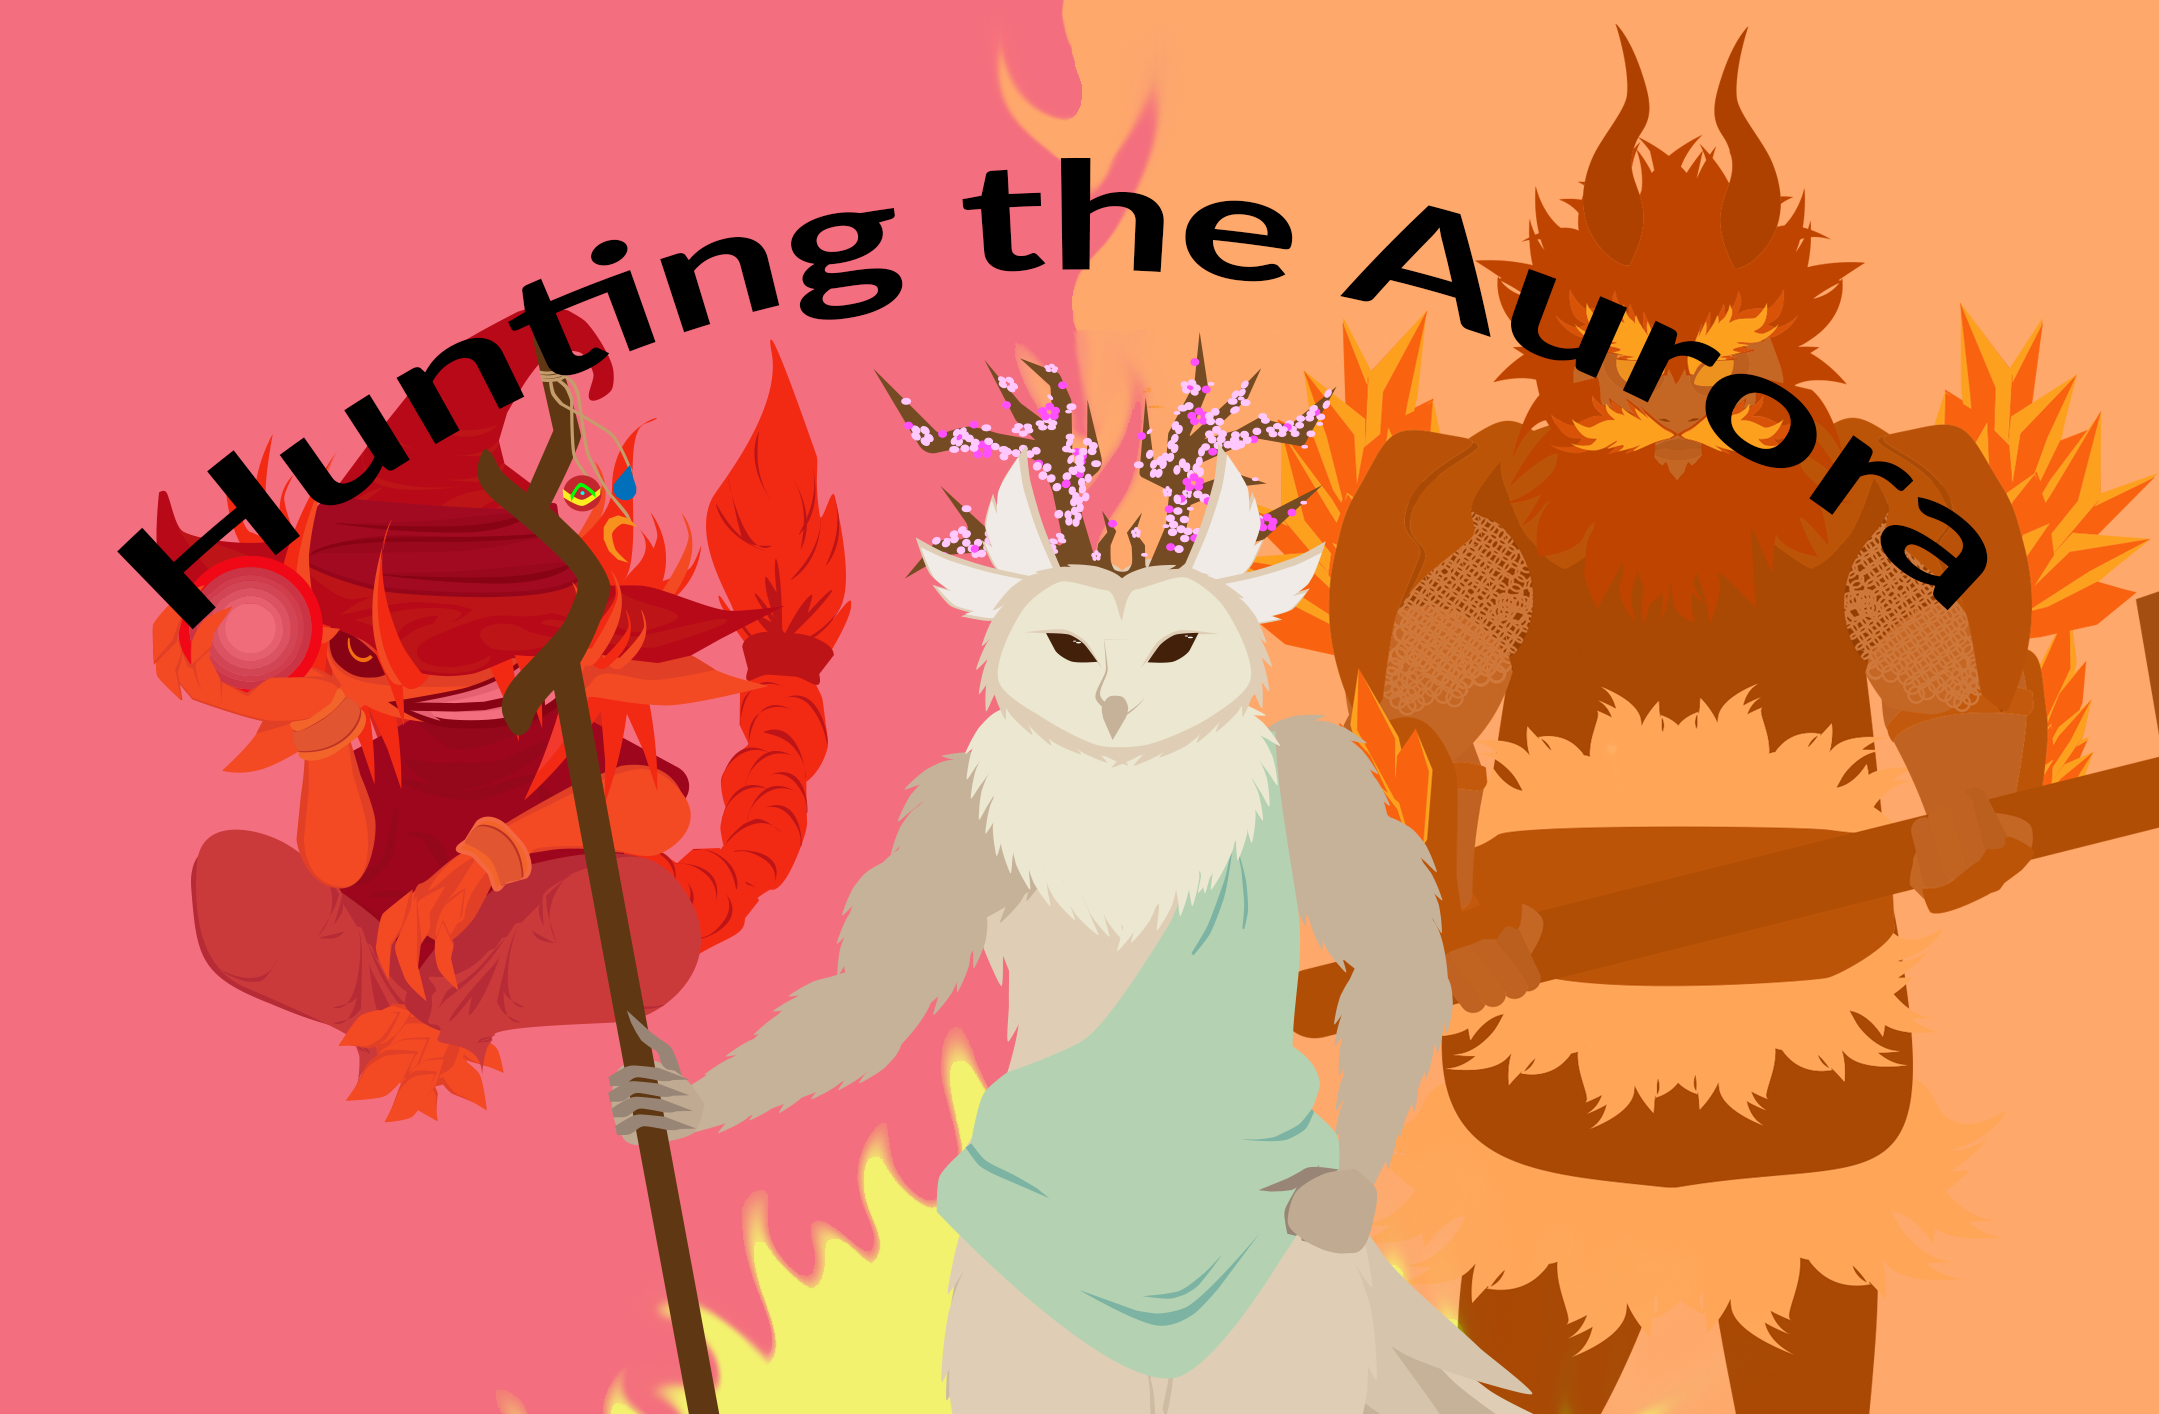 Hunting The Aurora